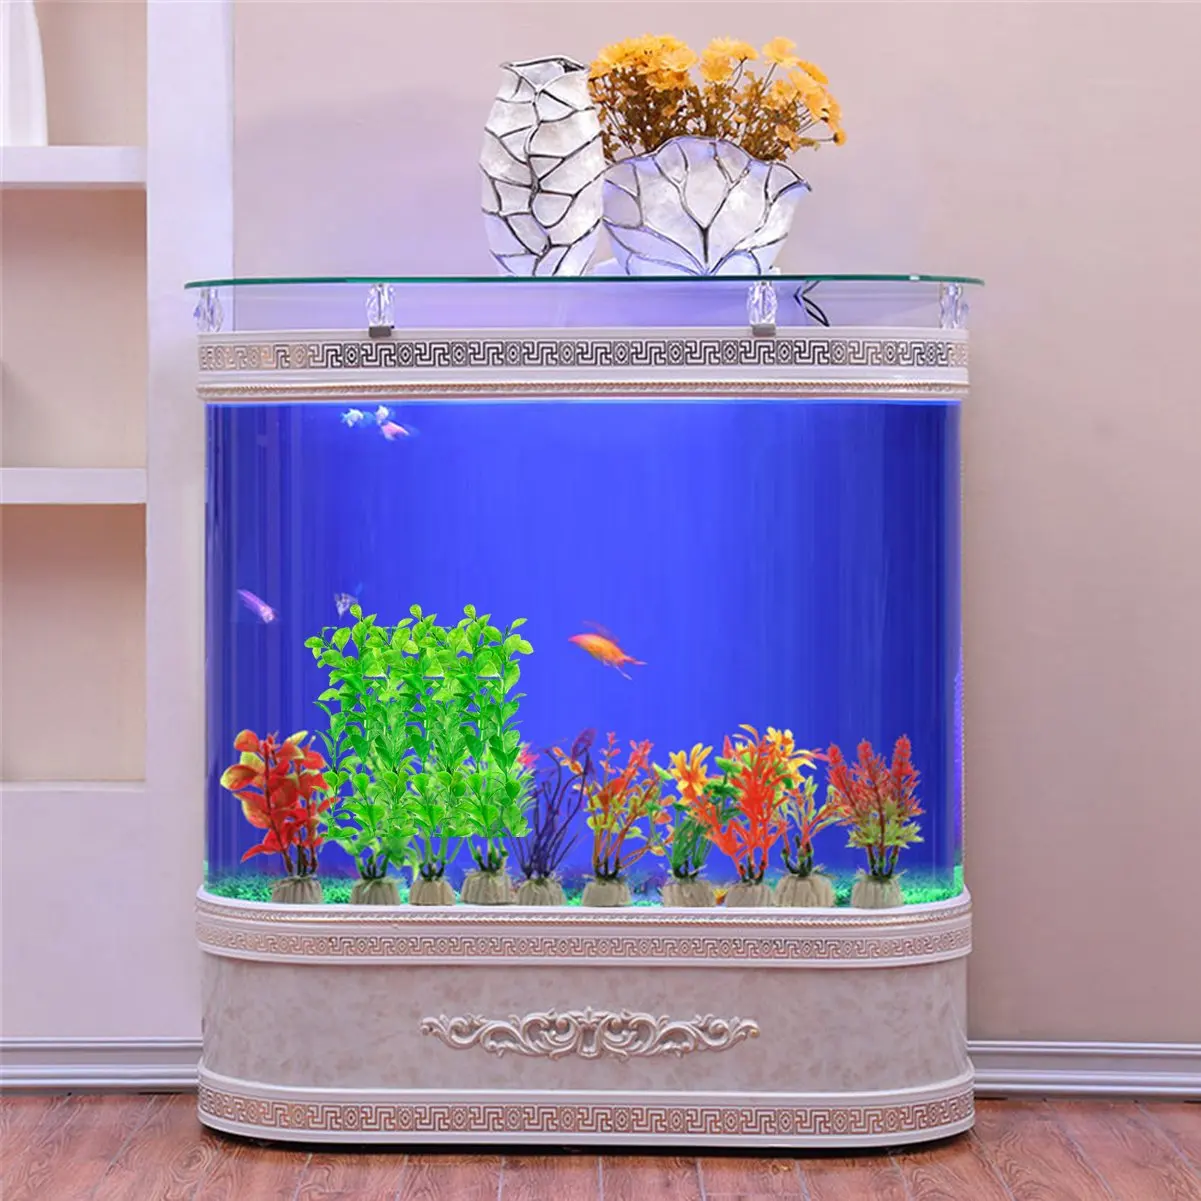 Fish Tank Decorations Home Décor Plastic Comsun 4 Pack Artificial Aquarium Plants Large Size 10.6 inch Approximate Height